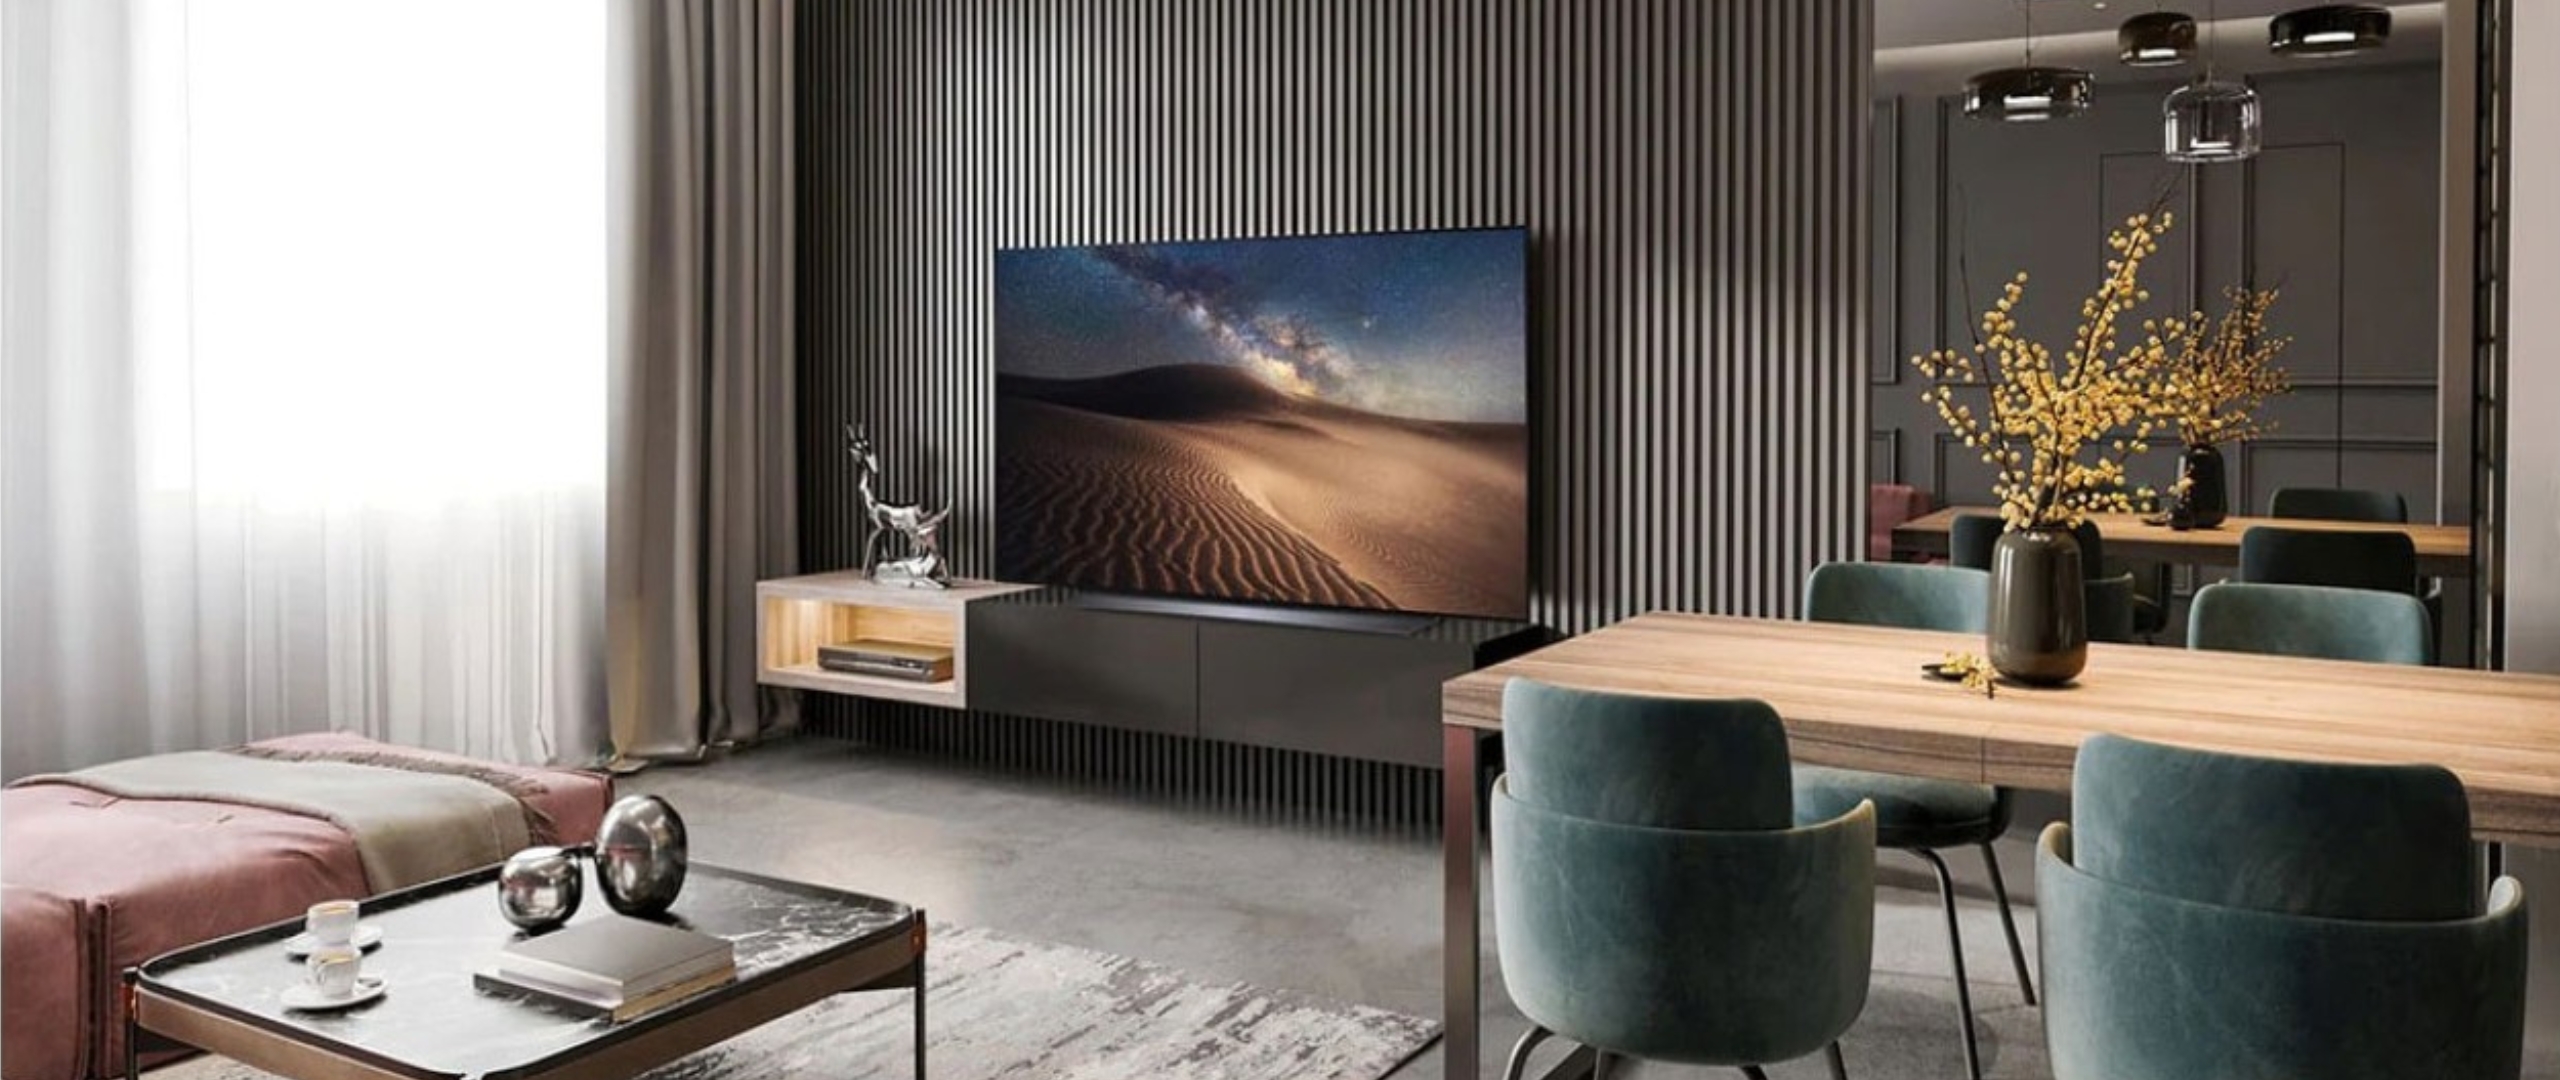 LG 65 inch 4K OLED TV Hands On 